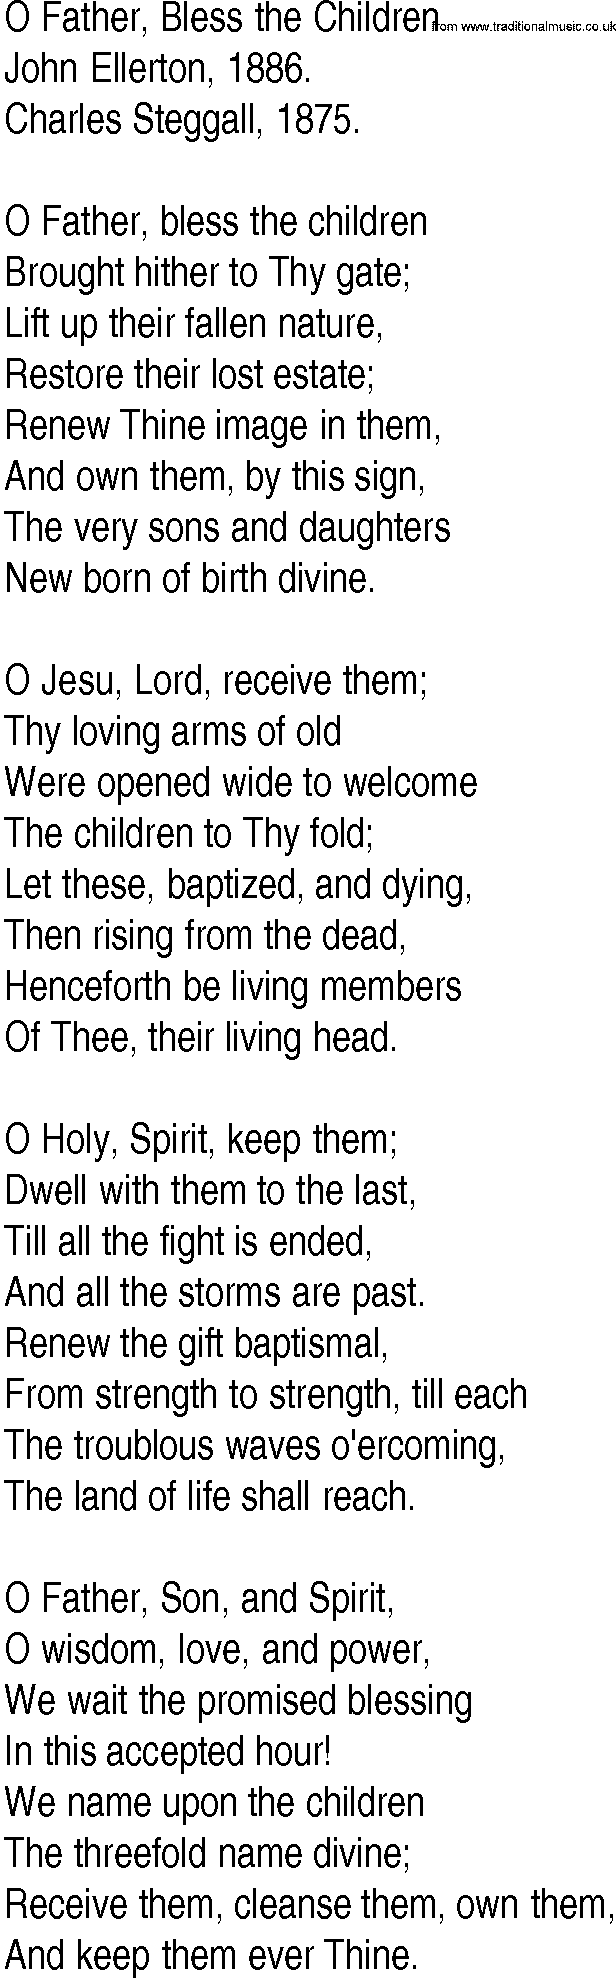 Hymn and Gospel Song: O Father, Bless the Children by John Ellerton lyrics